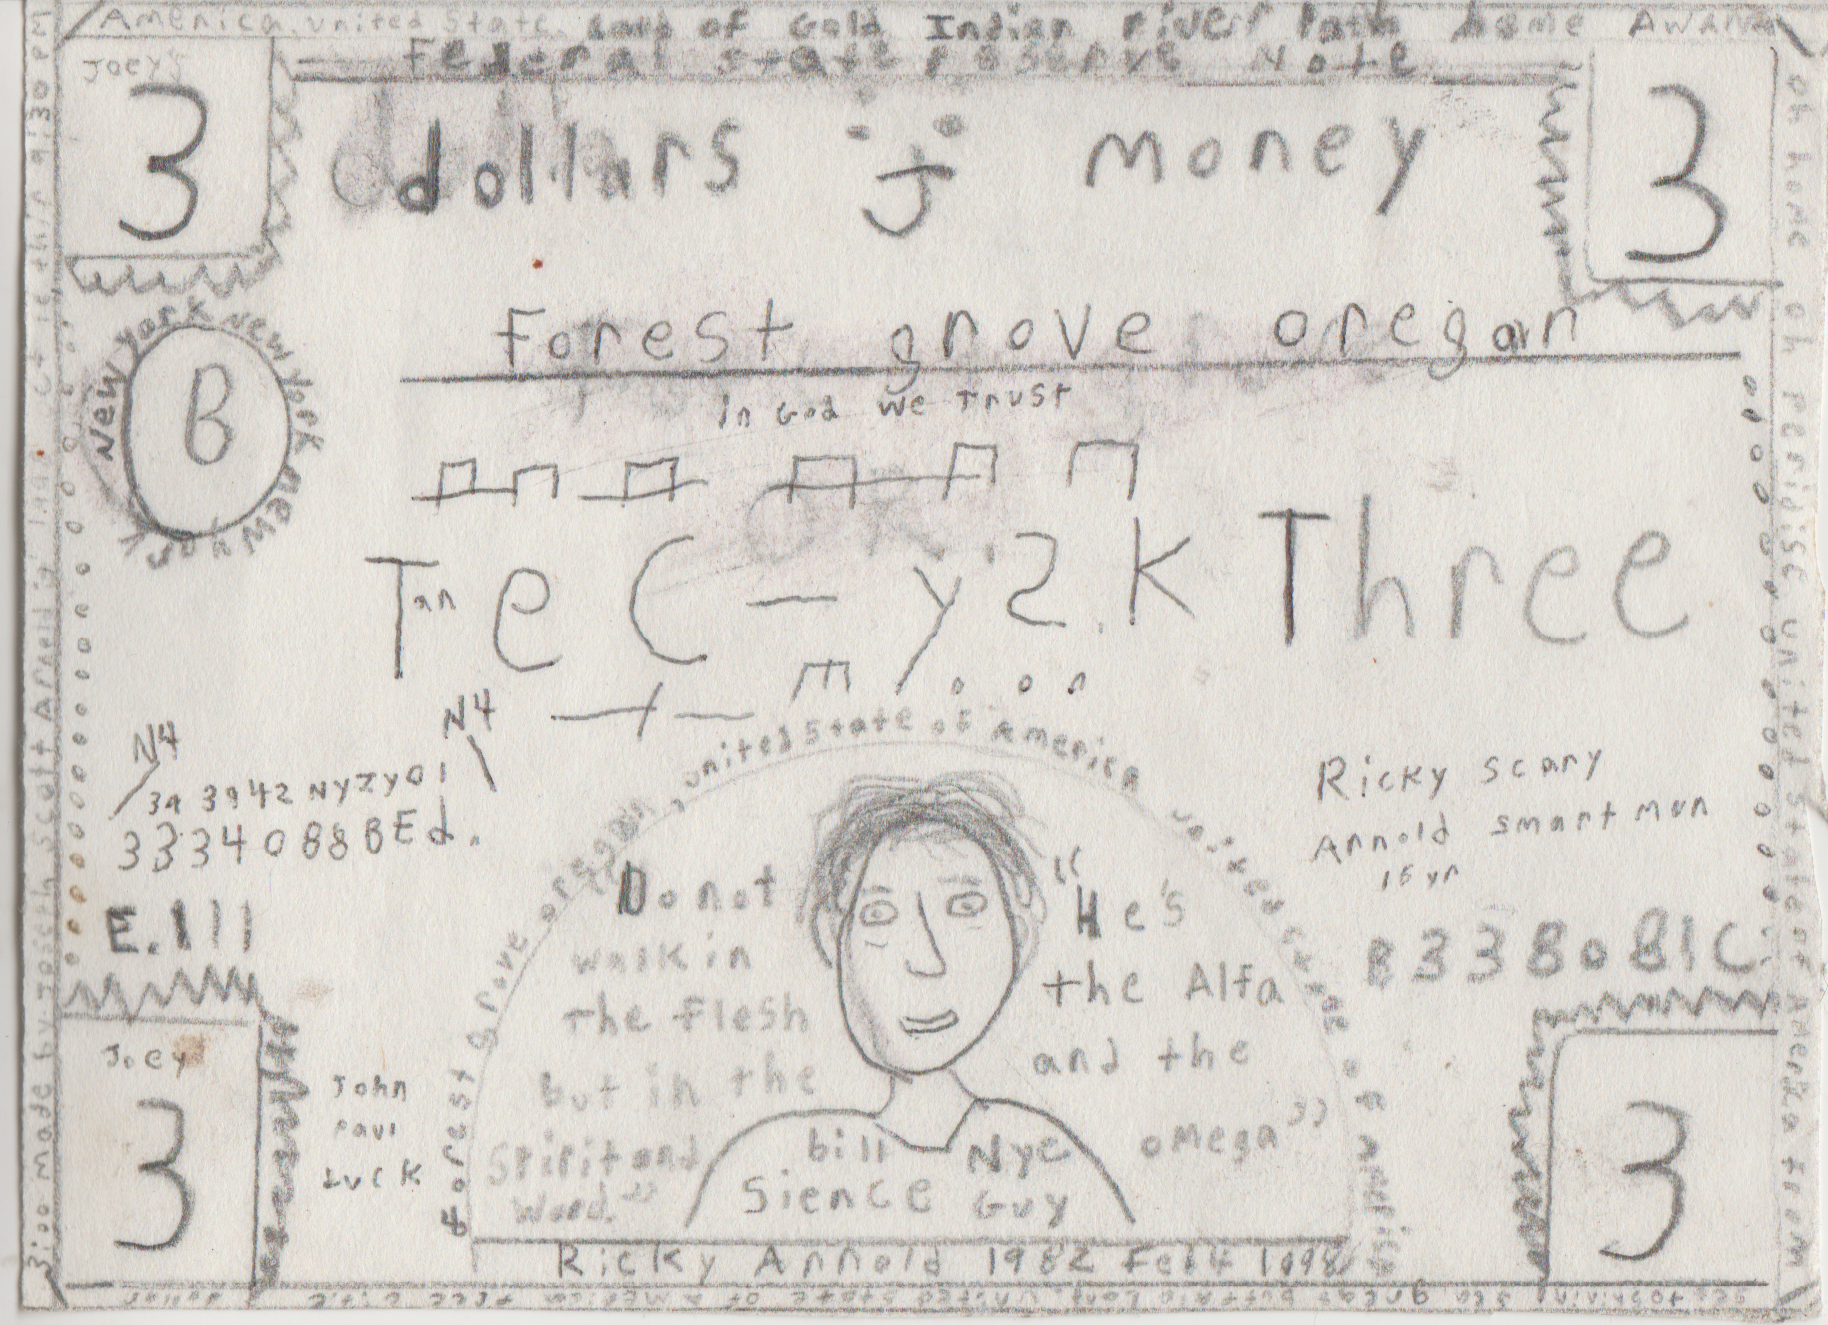 1998-10-15 - Thursday - Joey Money - 3-dollar bill, Tec-Y2K, Rick, Bill Nye, Omega, Oregan or Oregon, 09:30 PM, 1pic ok.png